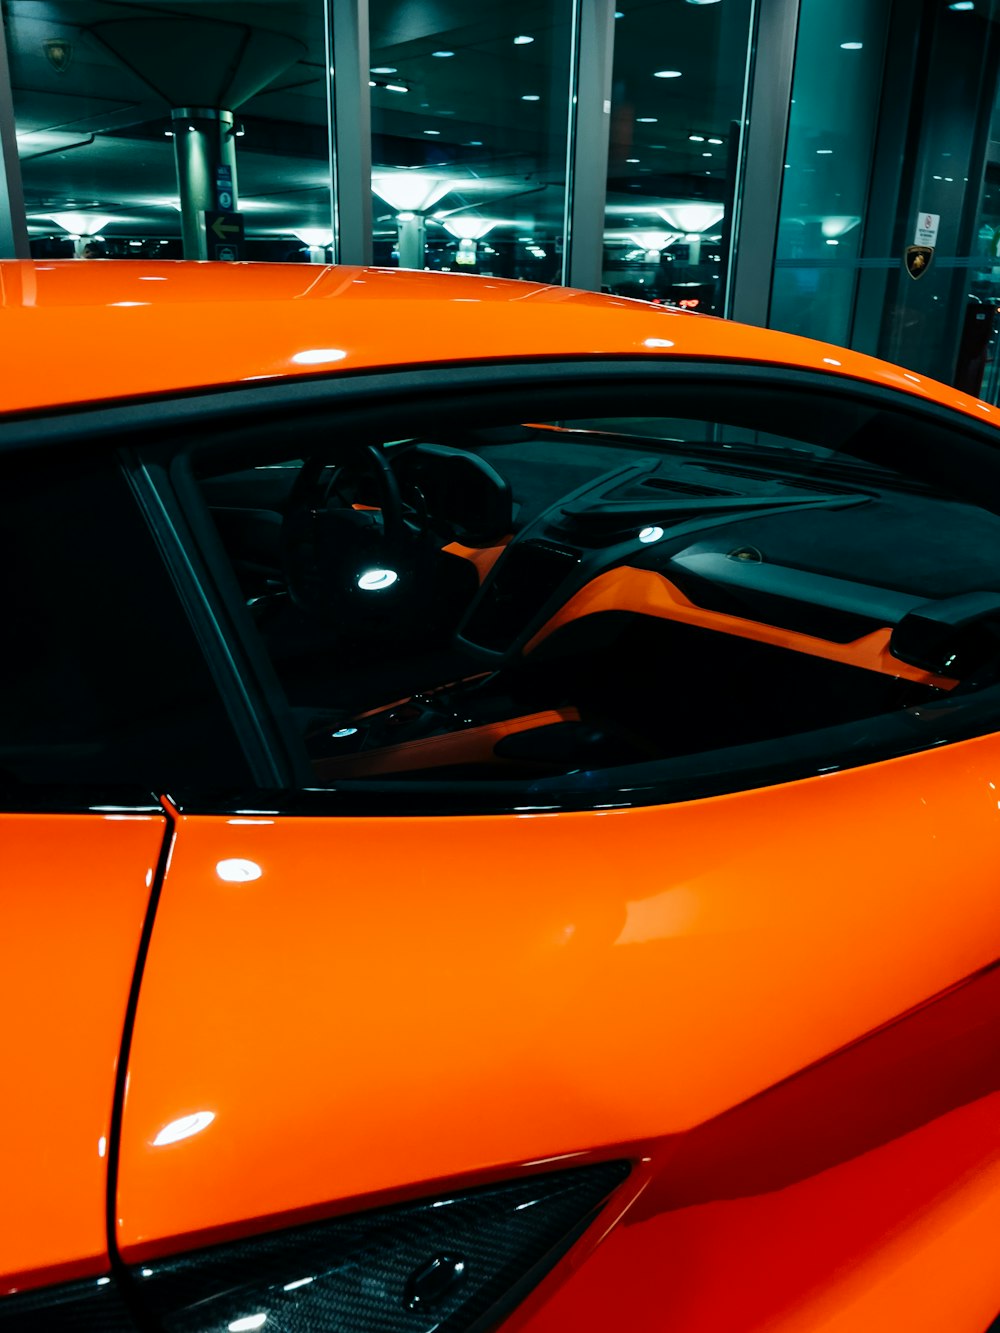 a bright orange sports car parked in a garage